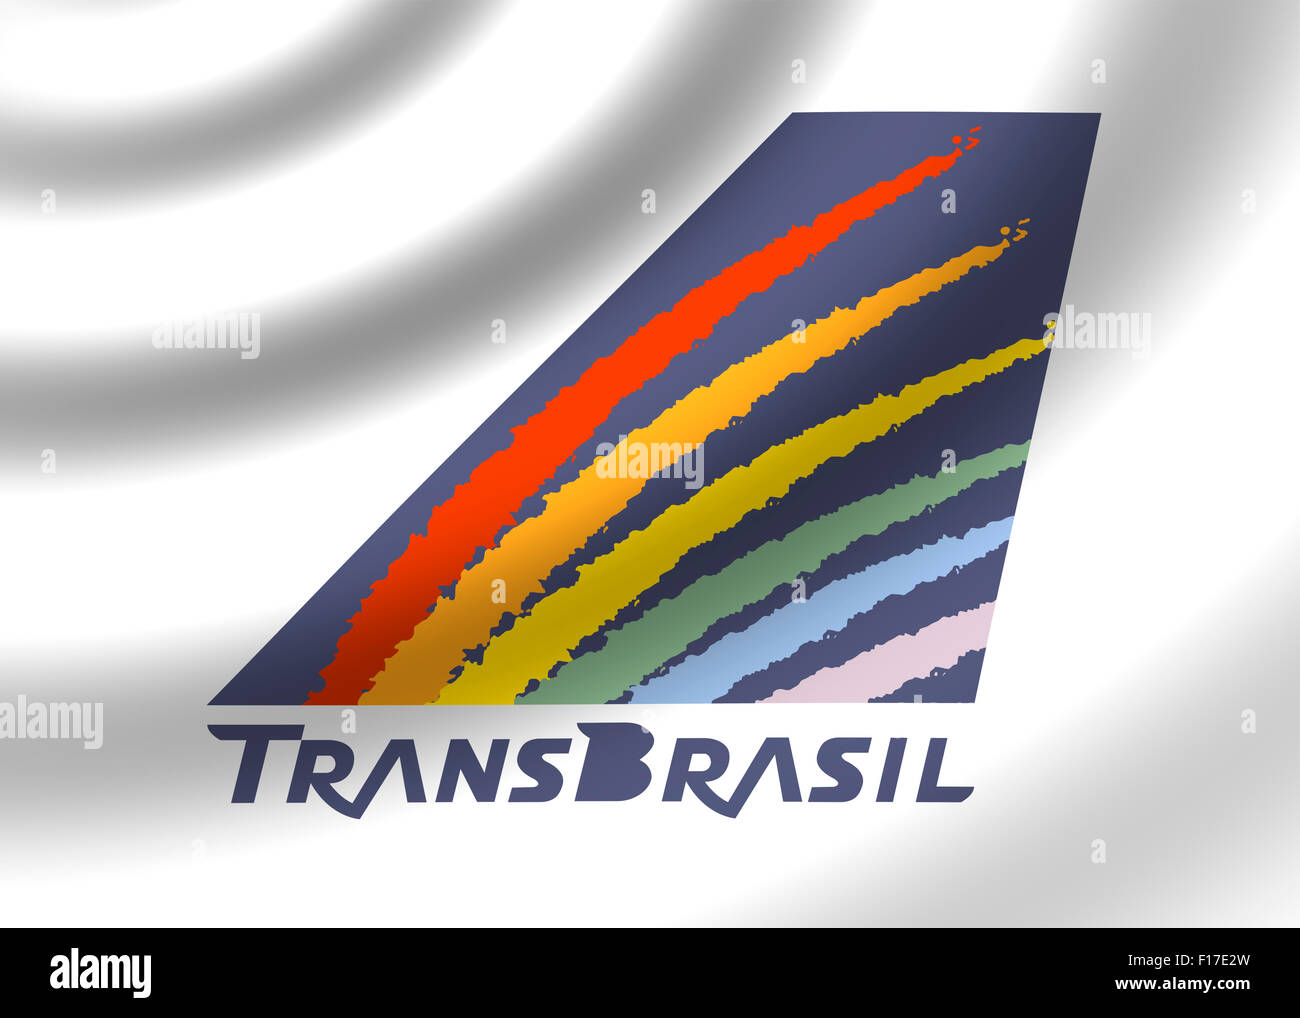 Trans Brasil  Airlines logo icon flag symbol emblem sign Stock Photo